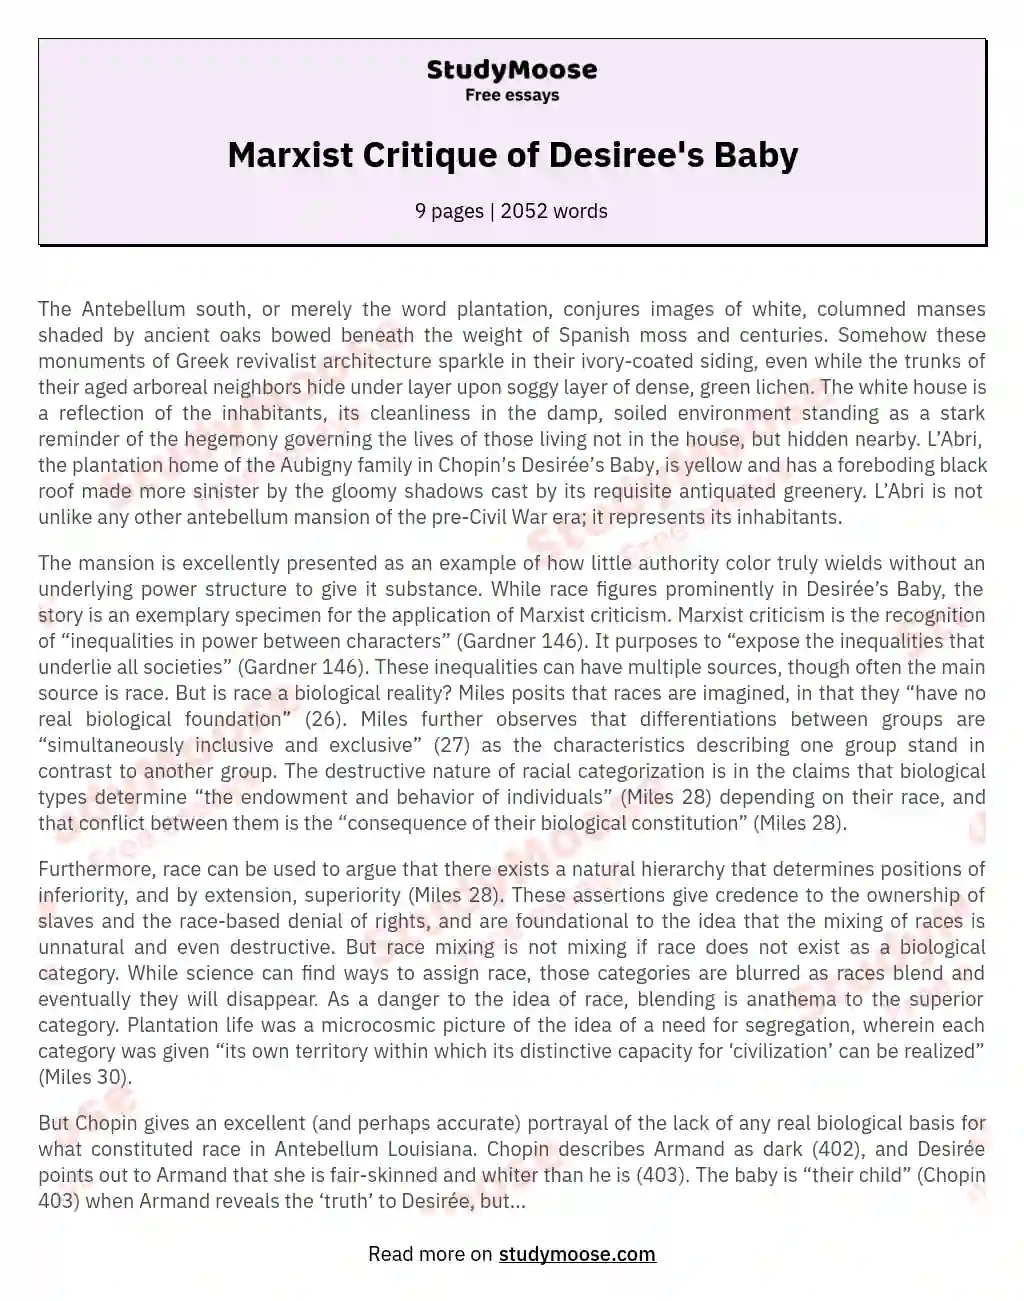 Marxist Critique of Desiree's Baby essay